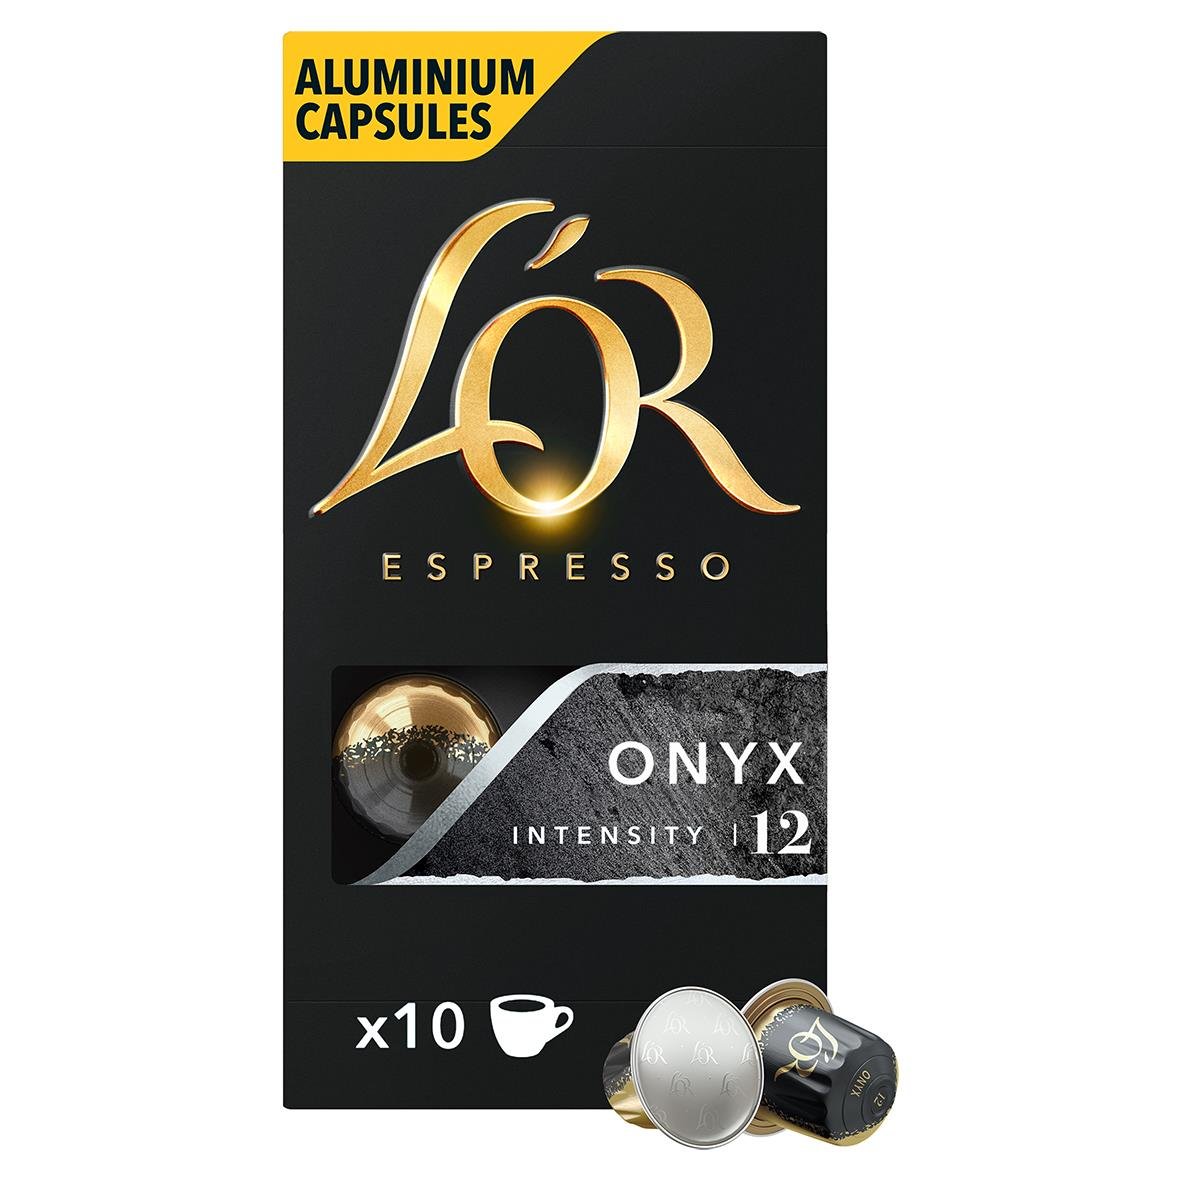 Kaffekapslar L'OR Espresso Onyx